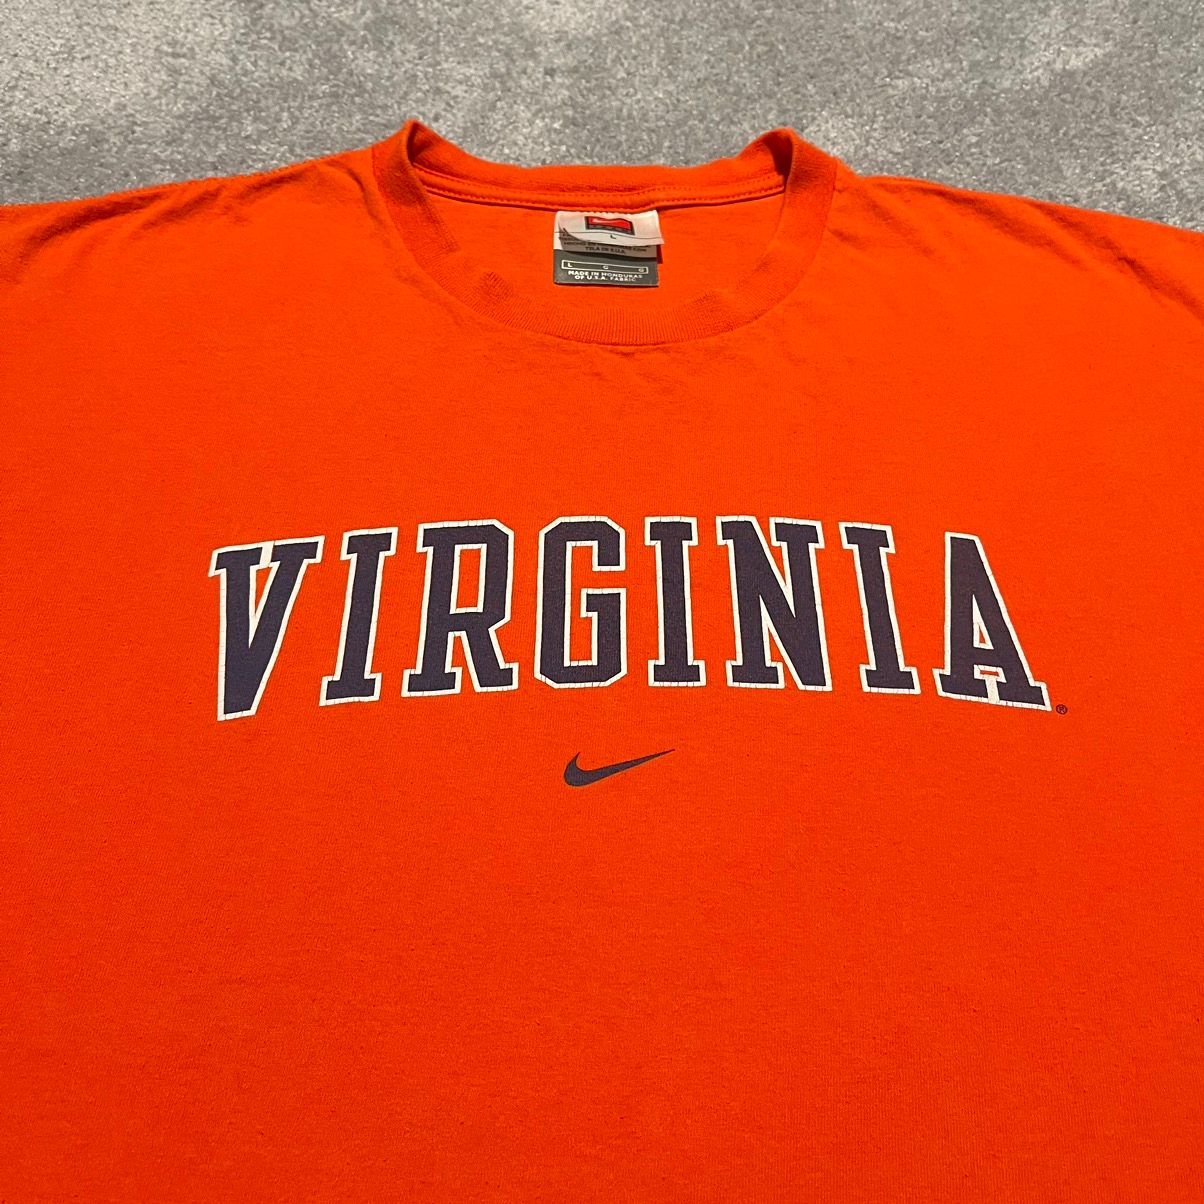 Nike Vintage Nike UVA Virginia Cavaliers Center Swoosh Logo Tee Size US L / EU 52-54 / 3 - 1 Preview